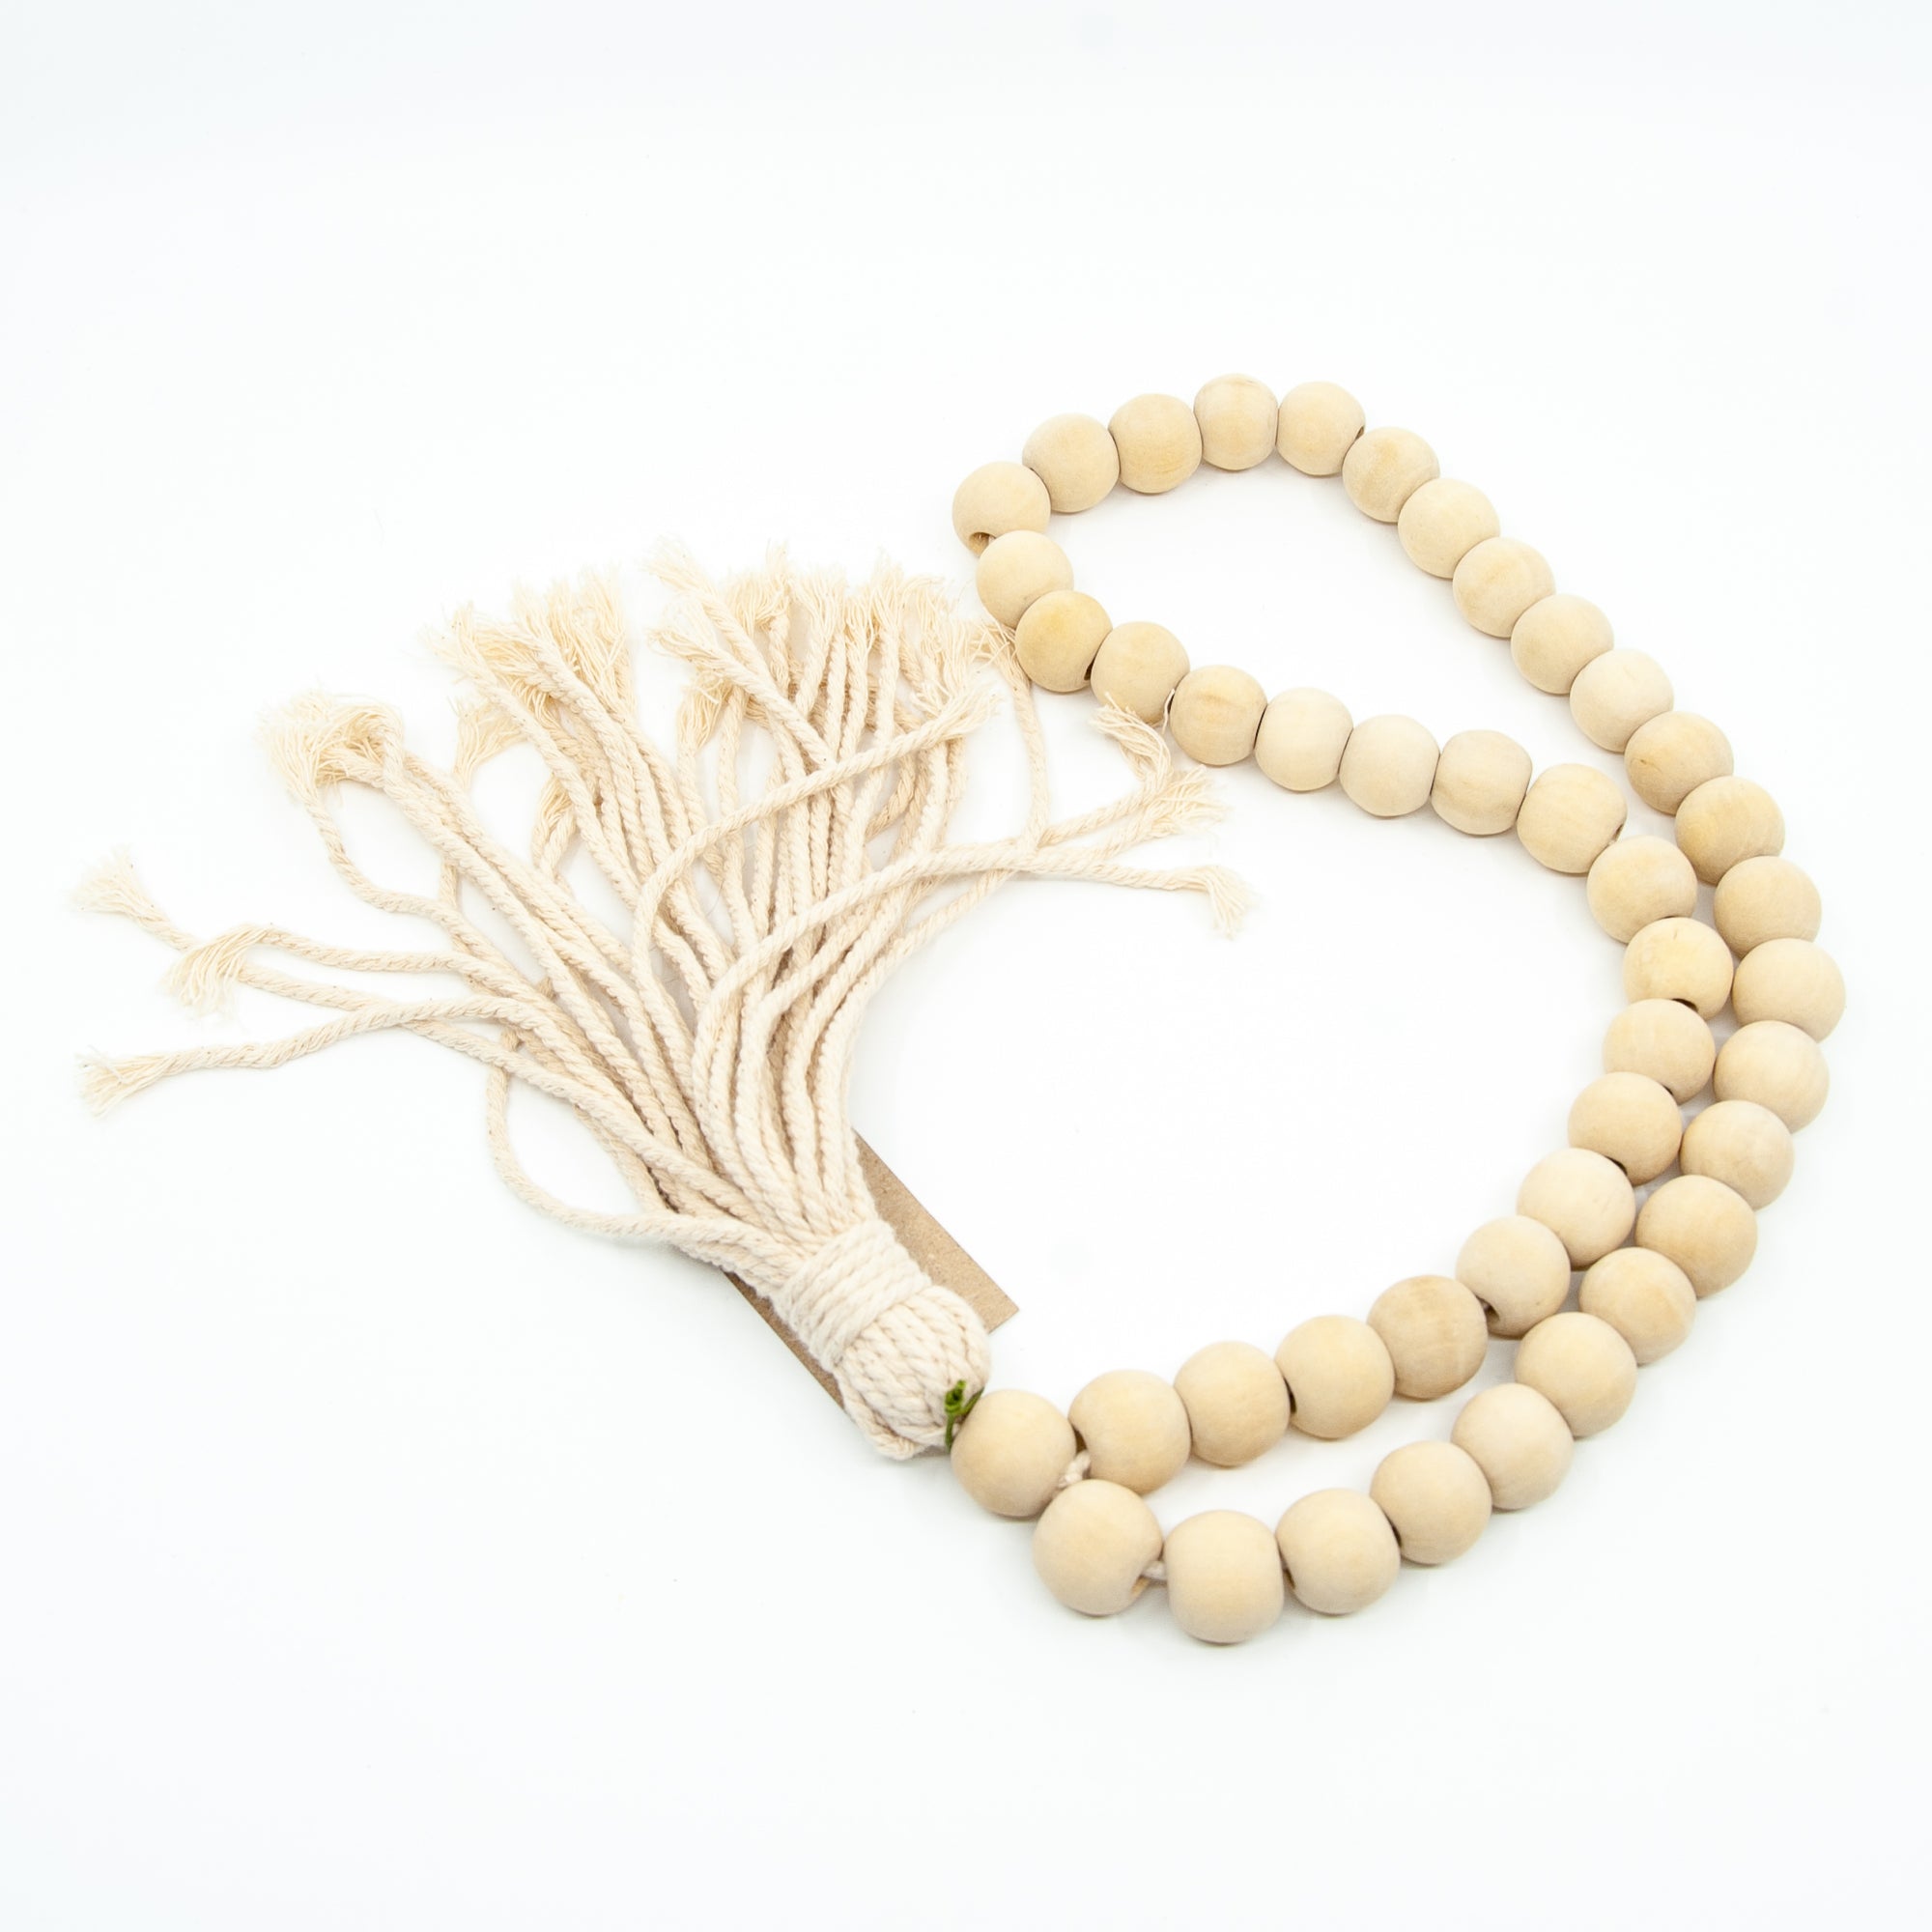 Decorative Beads (20mm)- White Tassel